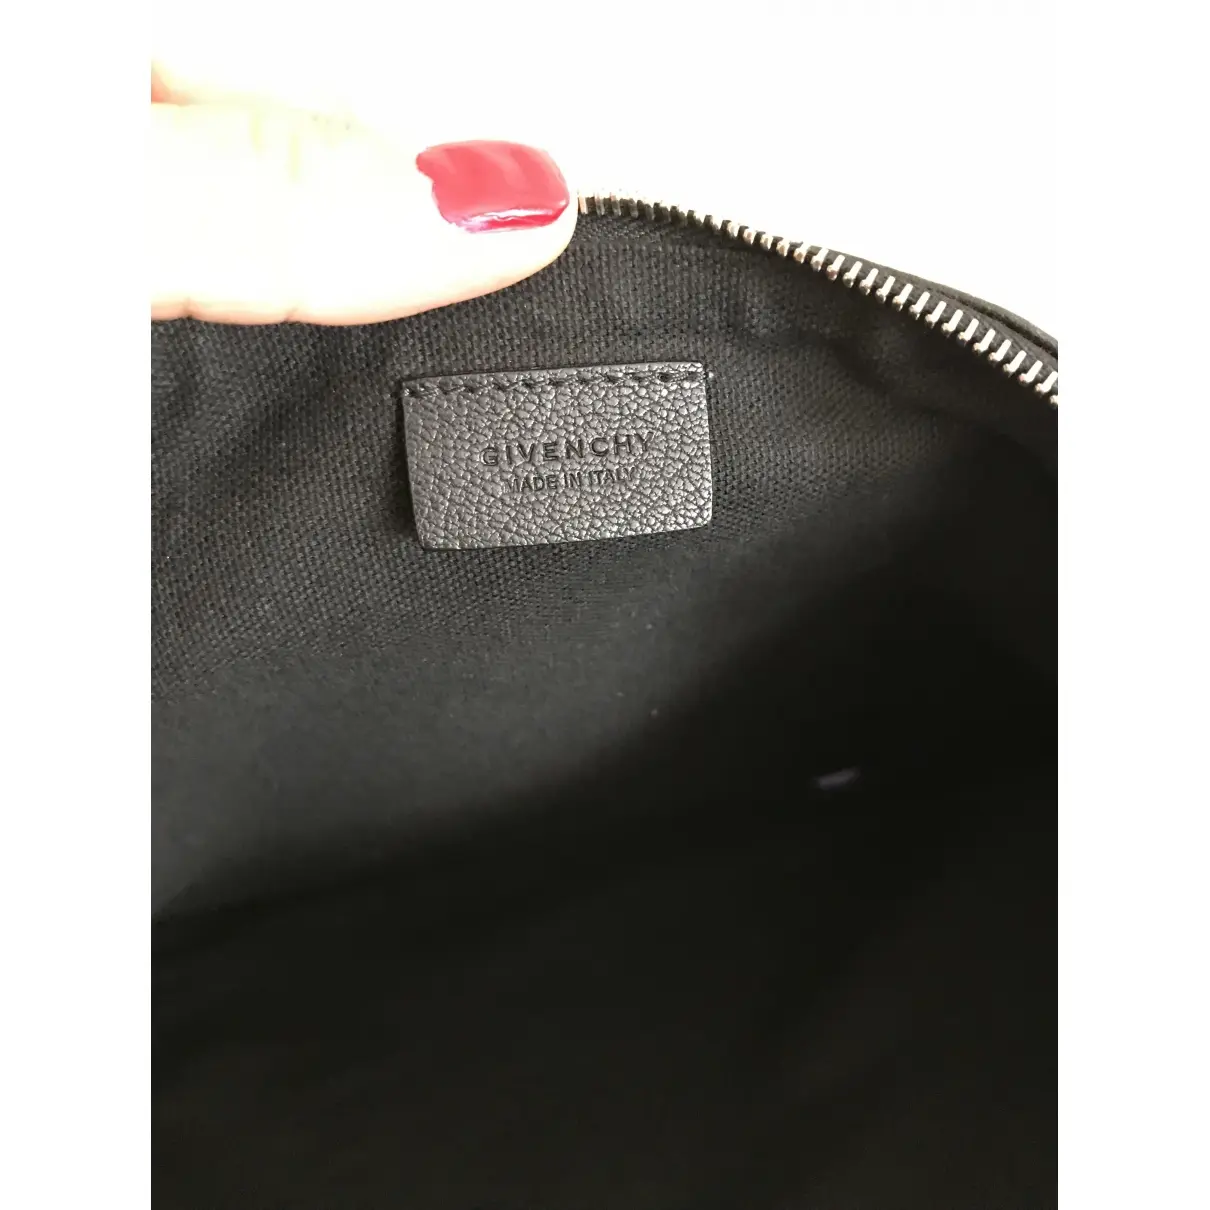 Buy Givenchy Antigona leather clutch bag online